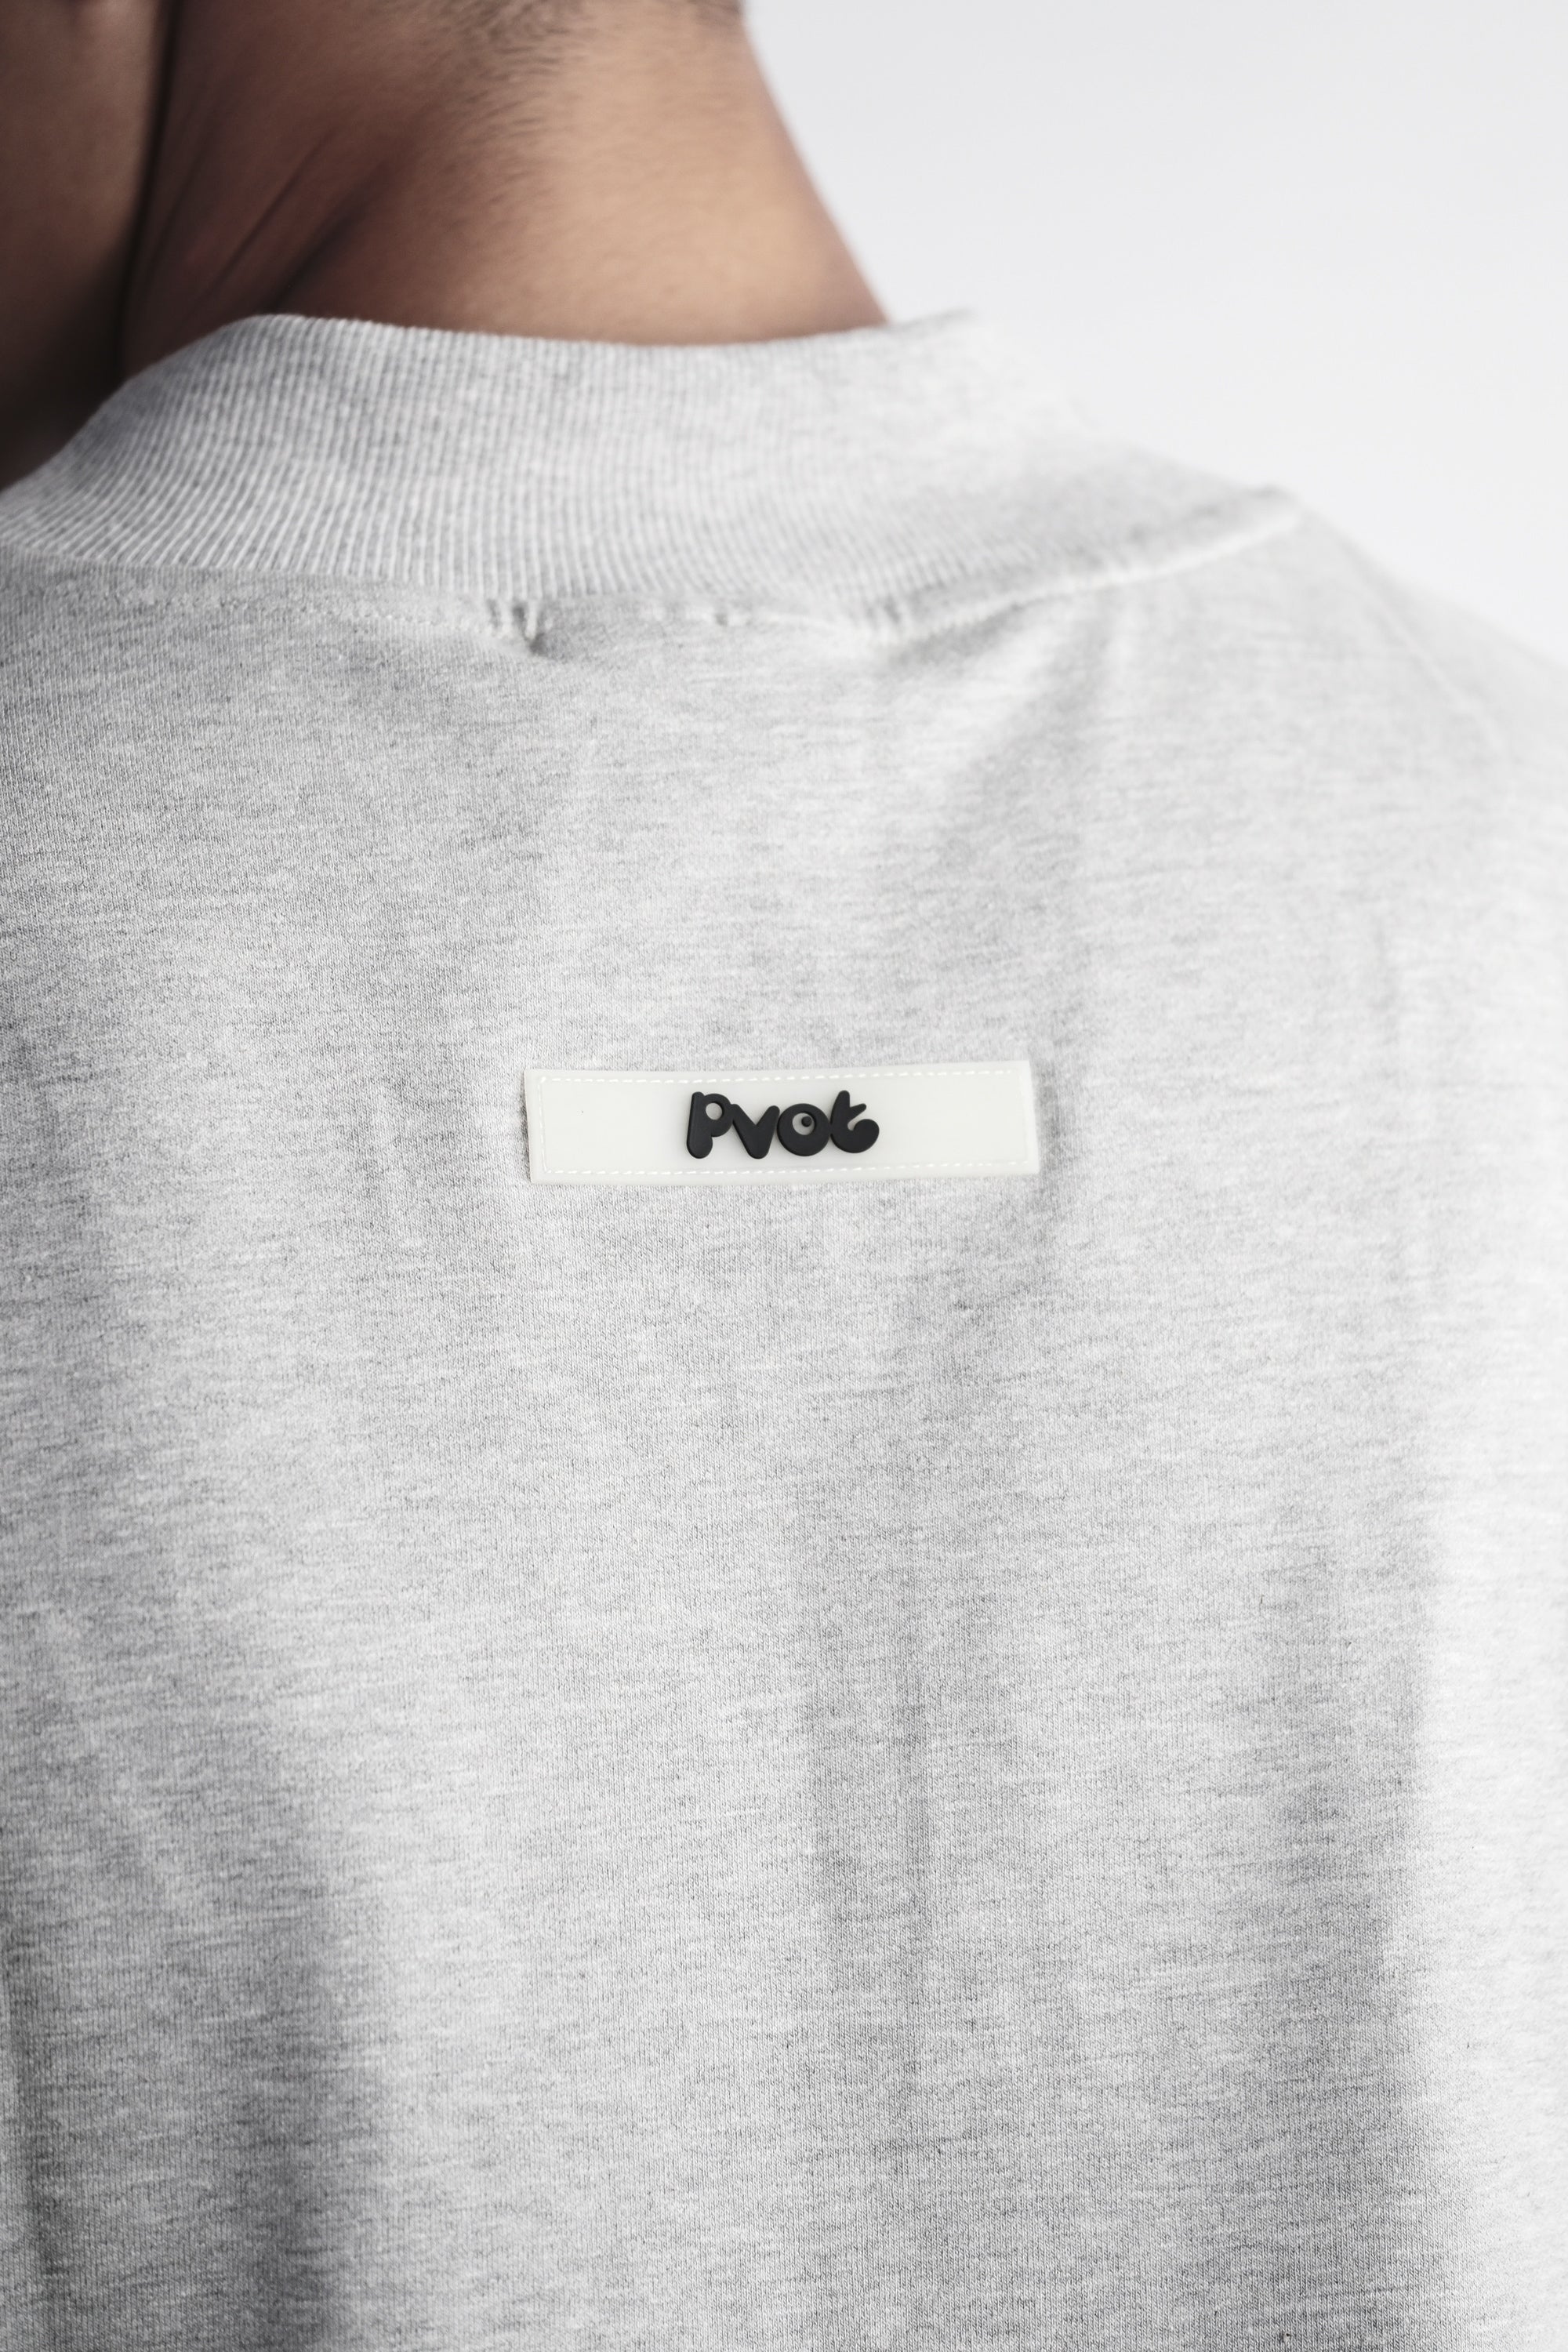 Pvot Mock Neck T-Shirts (Gray)